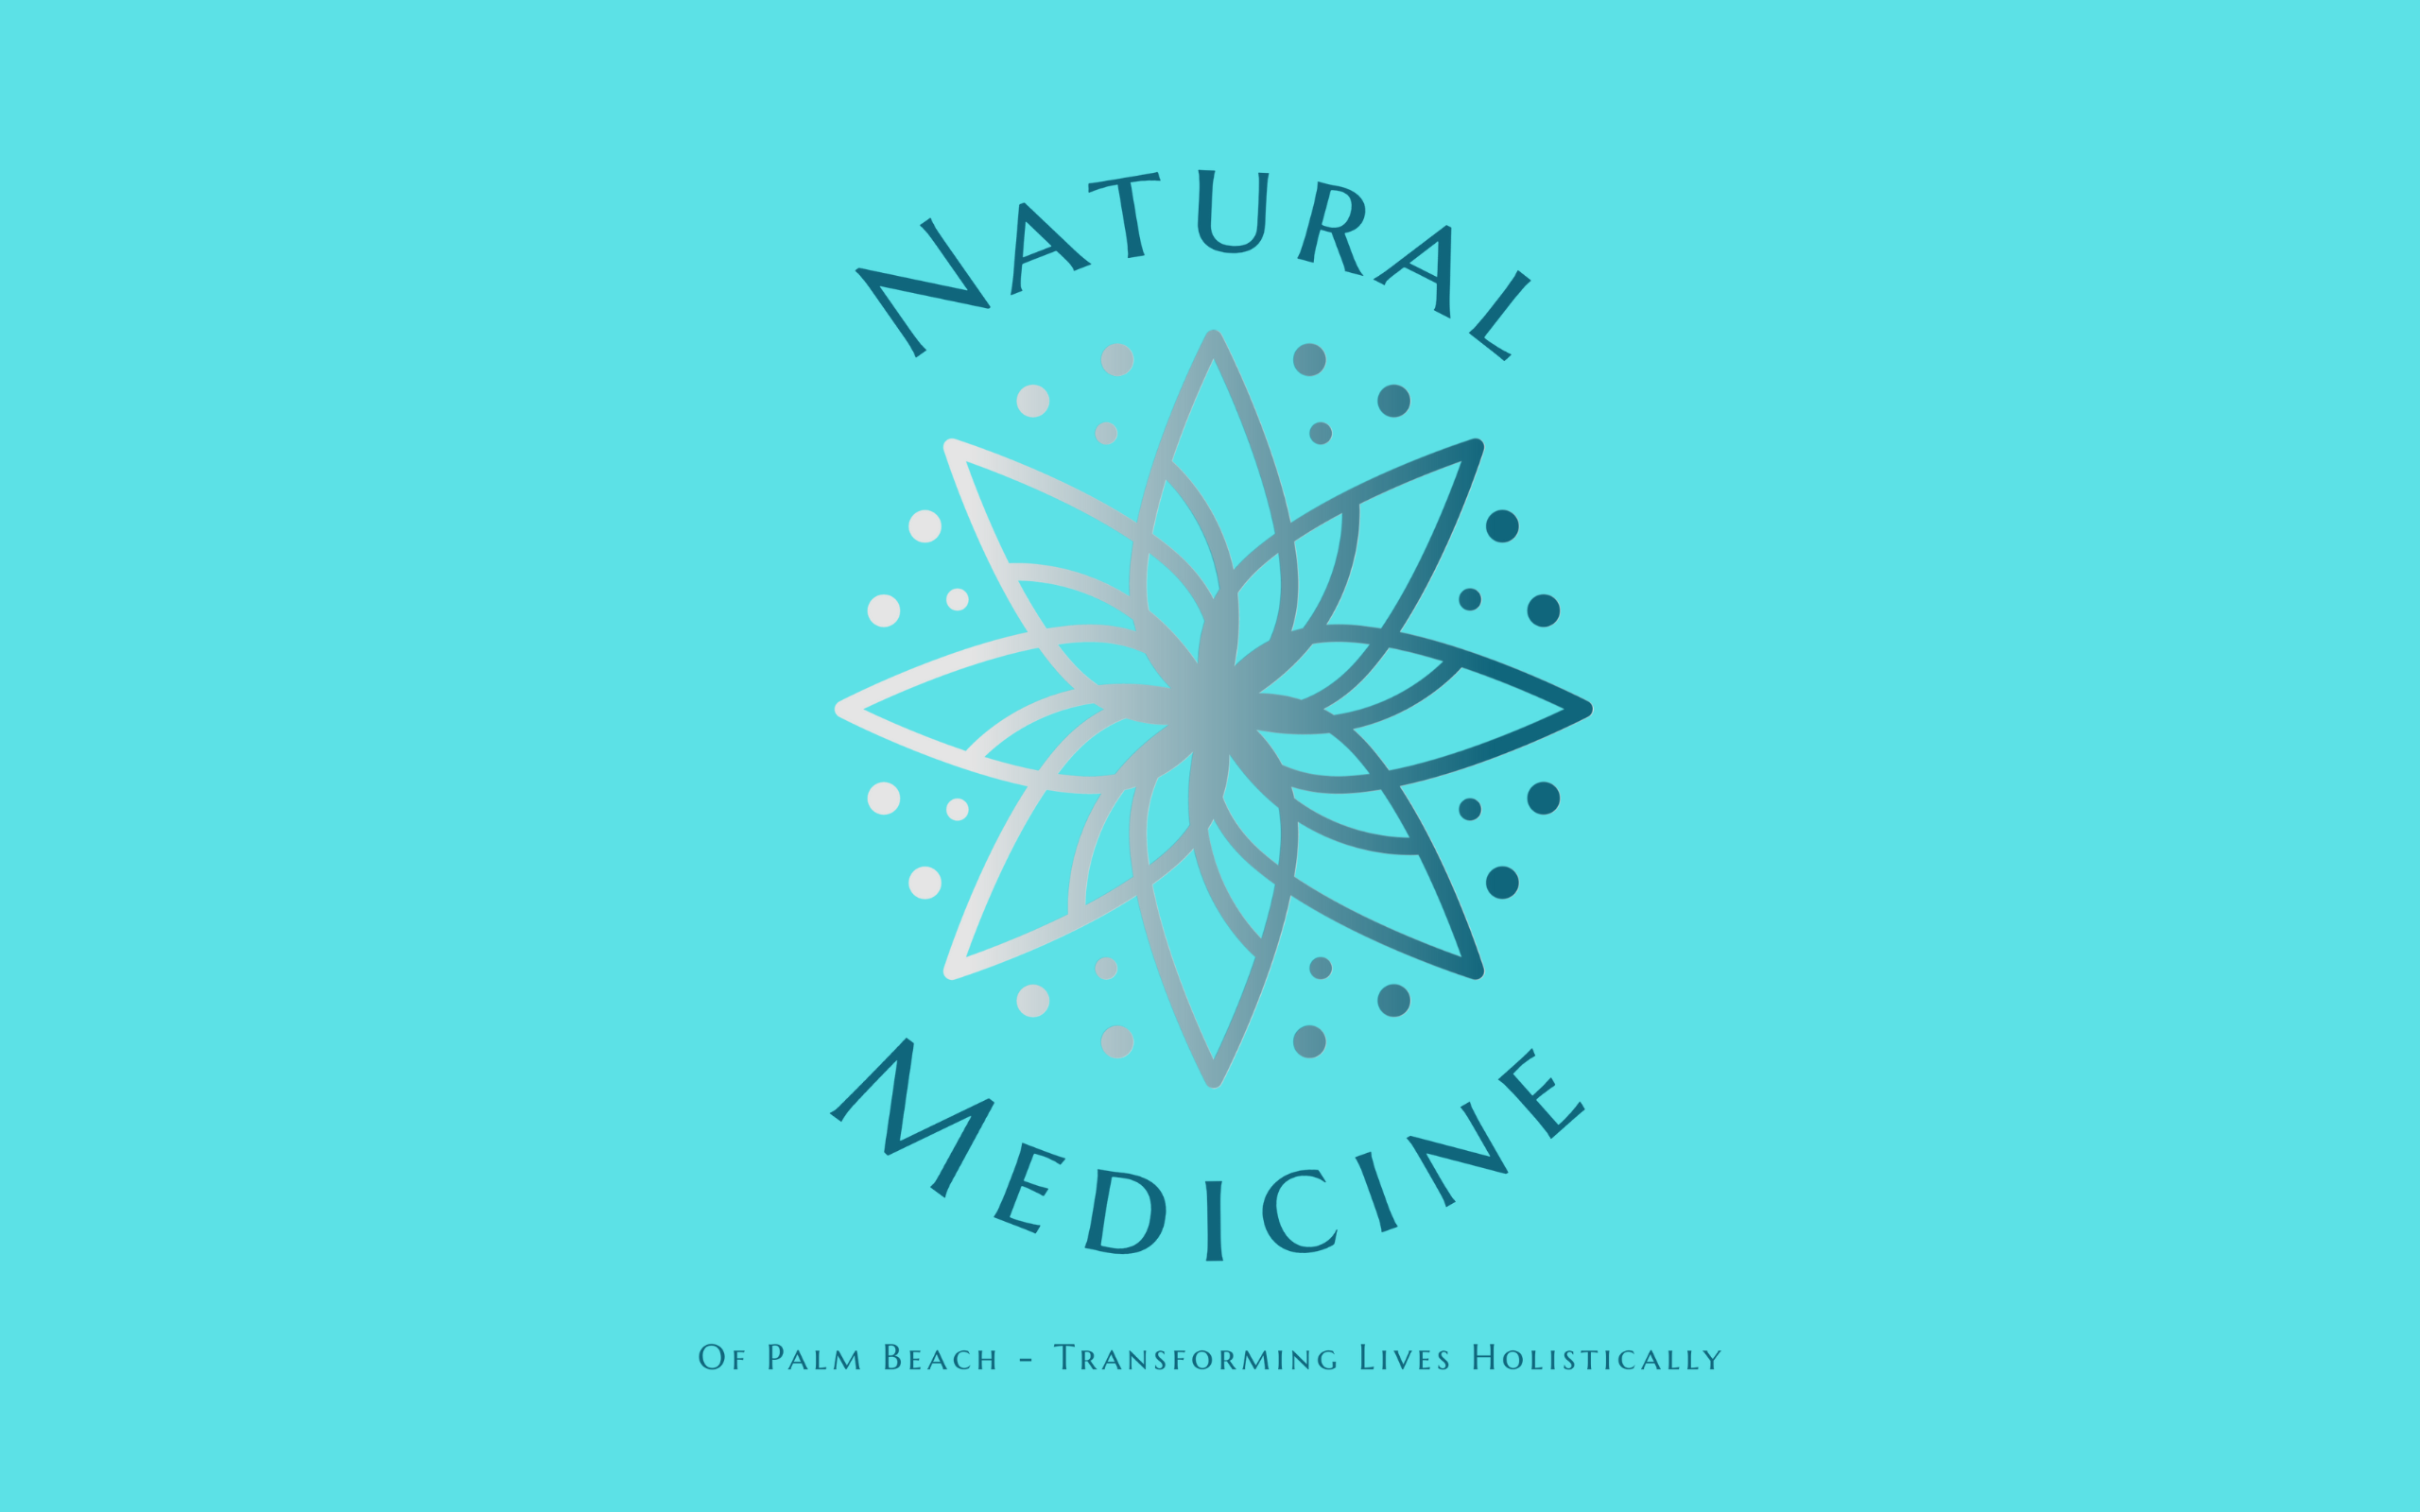 Natural Medicine of Palm Beach